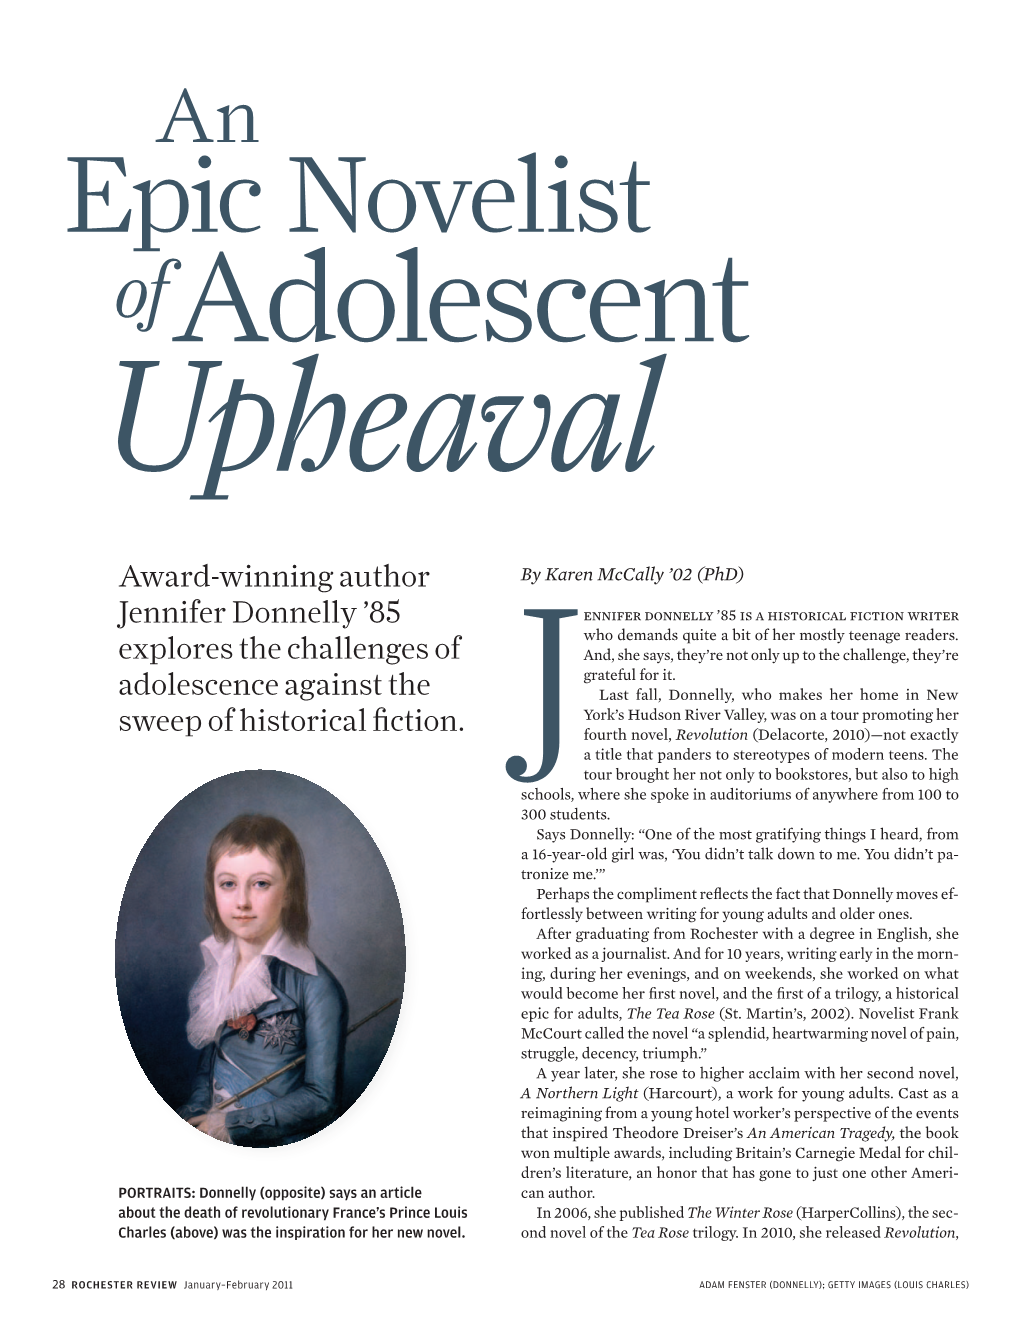 Epic Novelist of Adolescent Upheaval